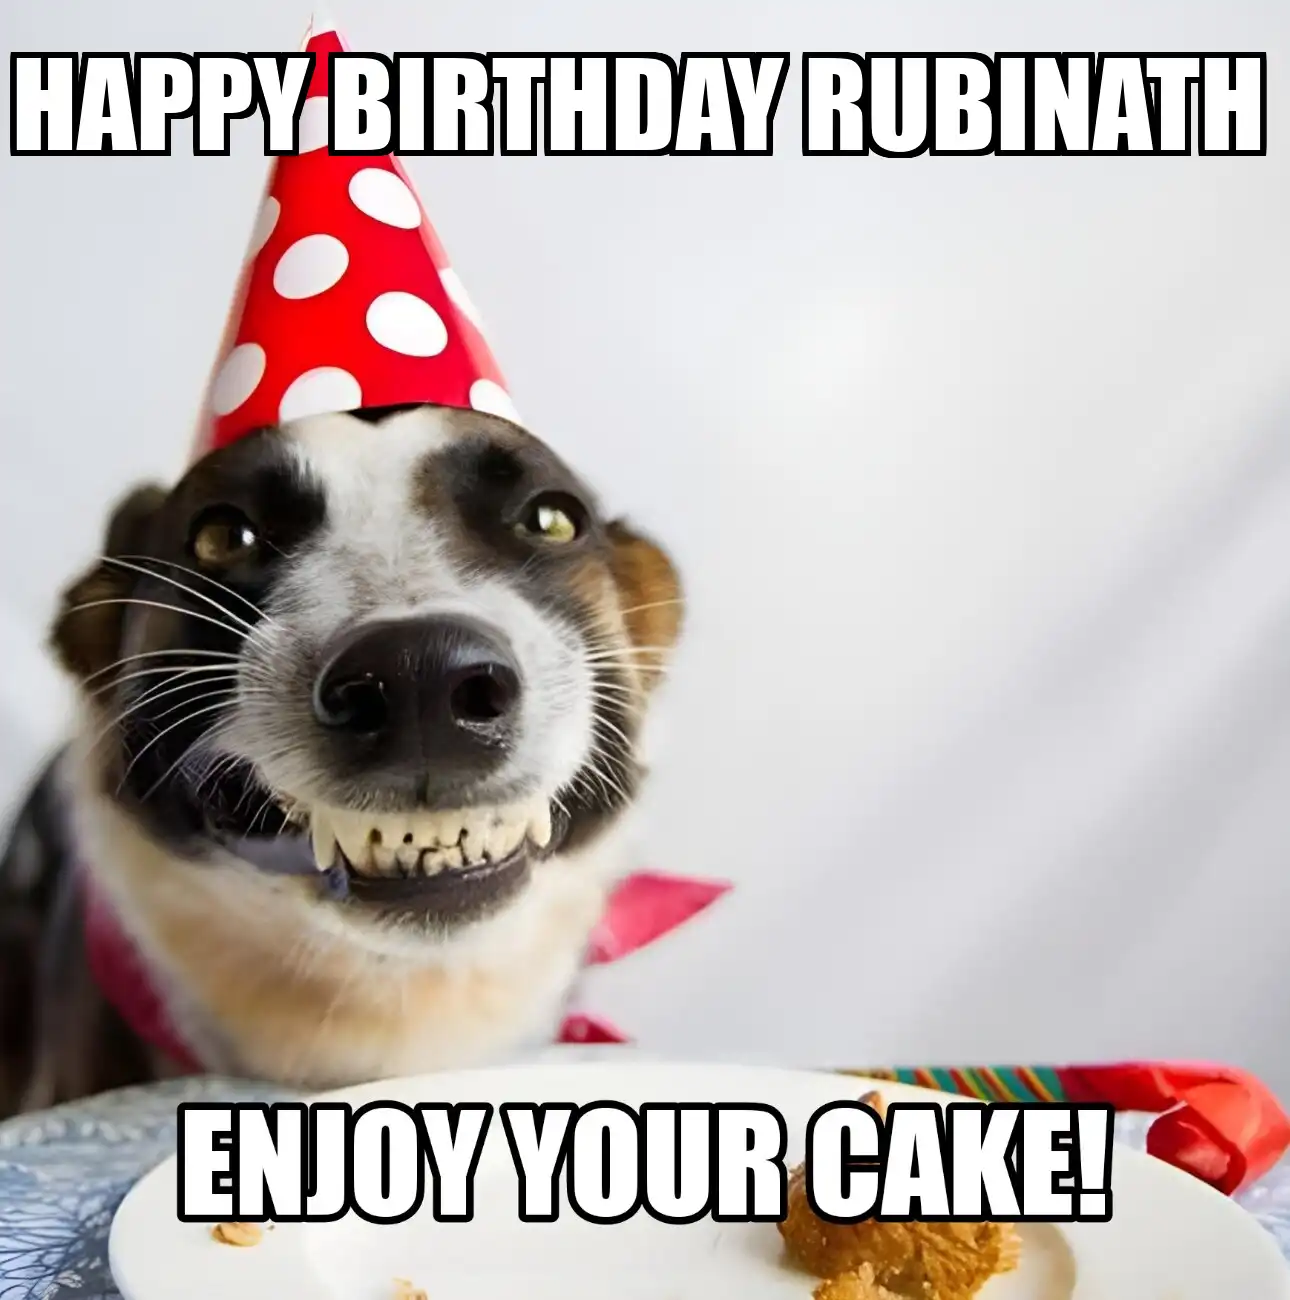 Happy Birthday Rubinath Enjoy Your Cake Dog Meme